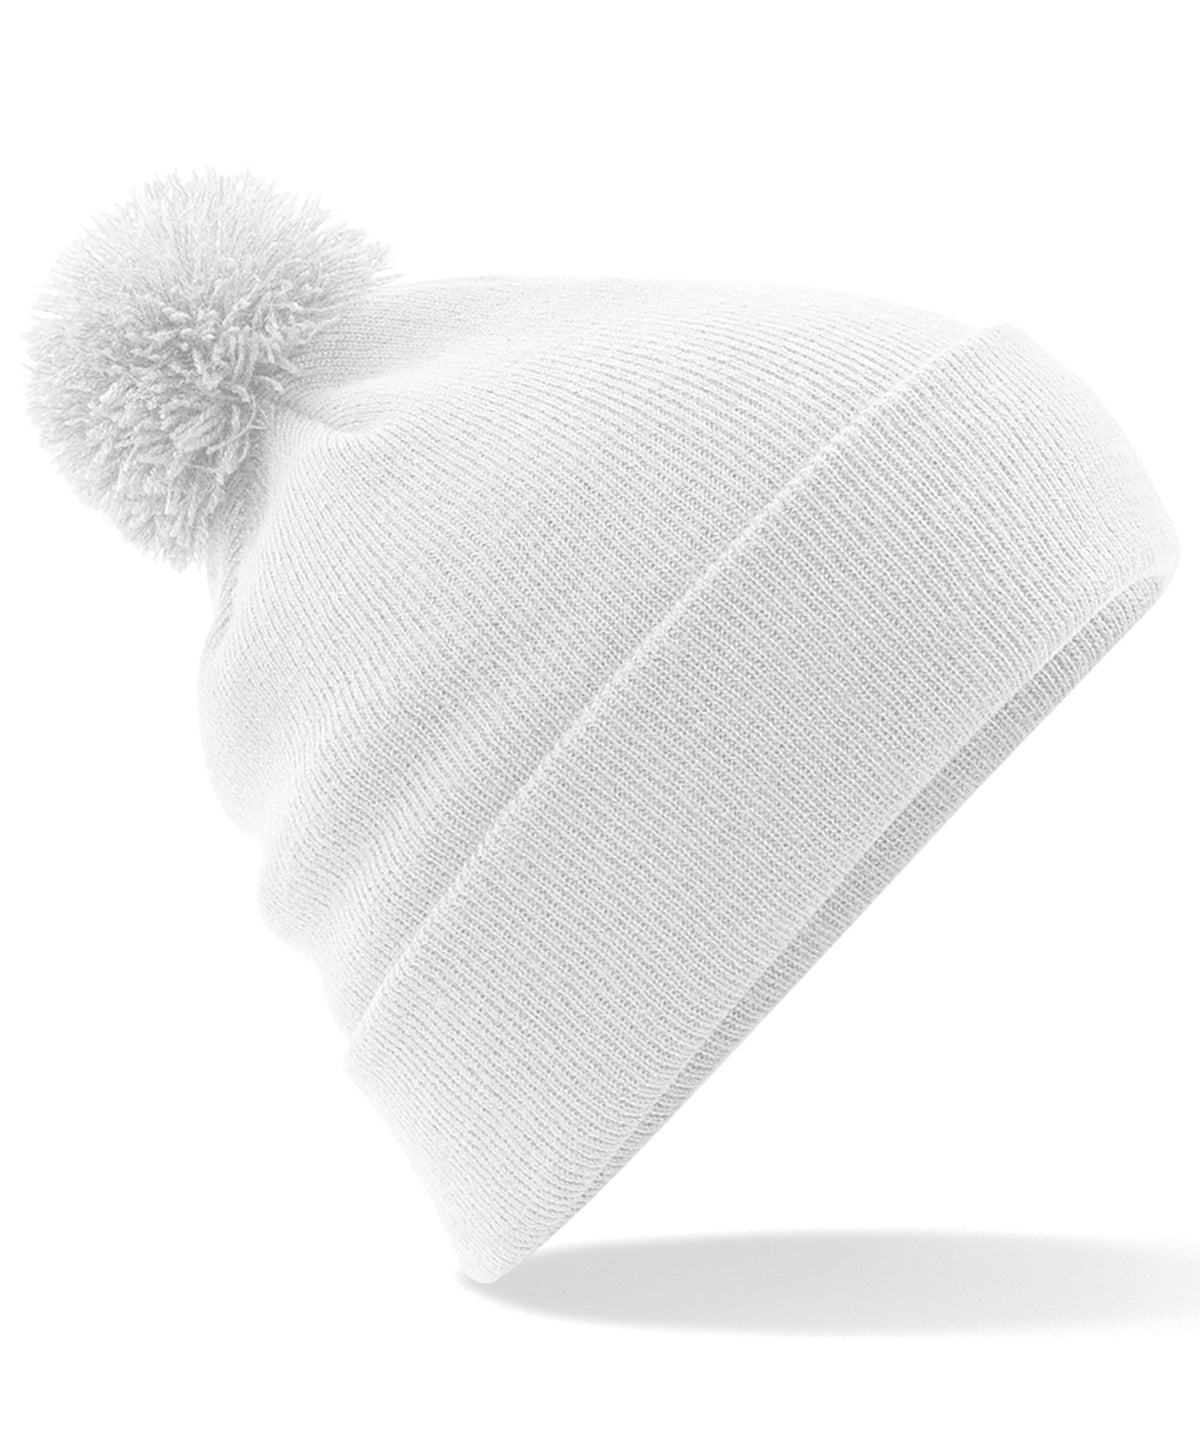 Personalised Hats - White Beechfield Original pom pom beanie